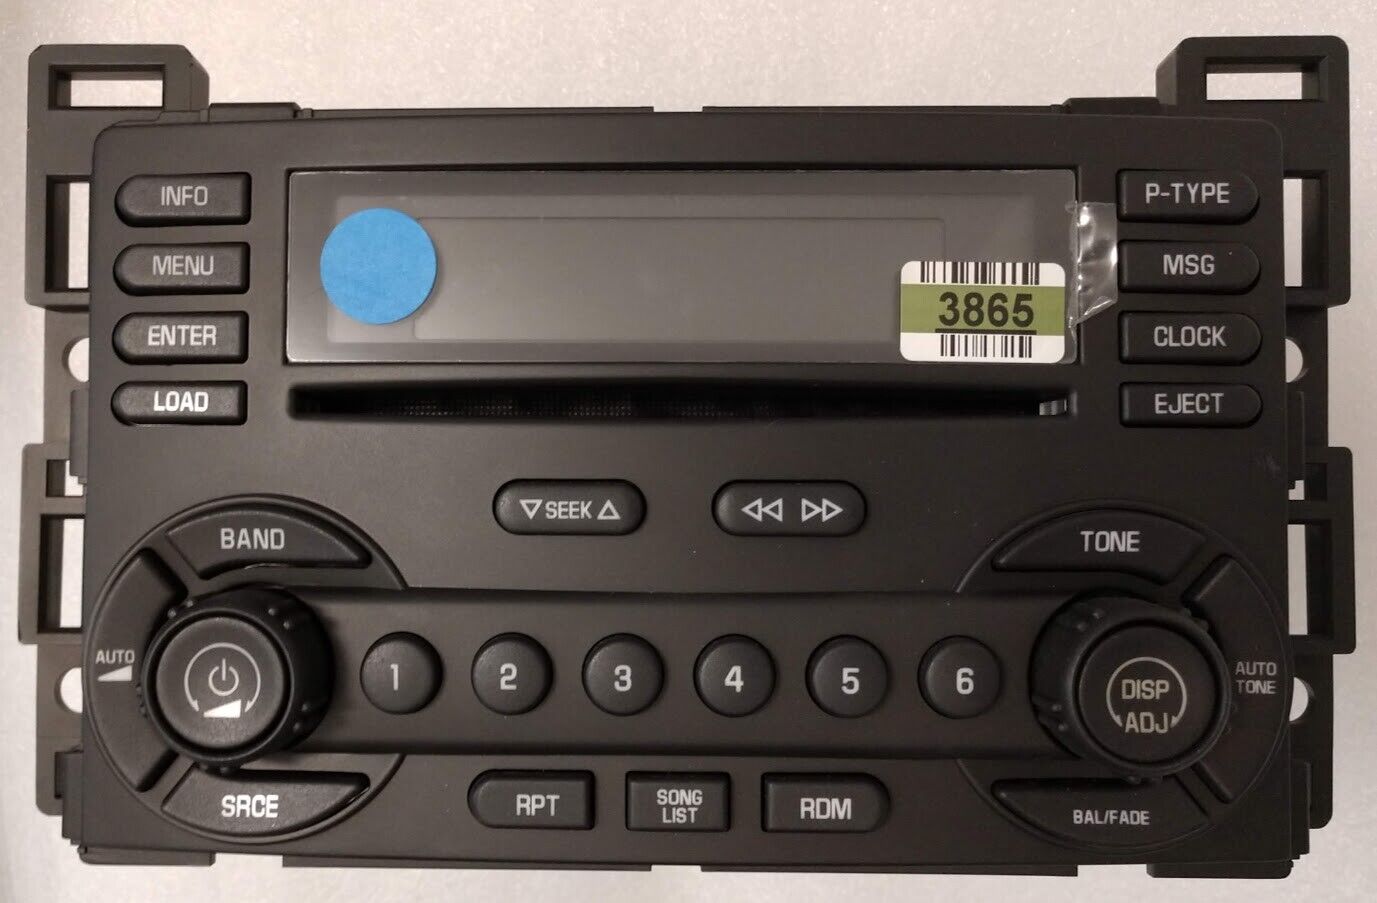 Pontiac G6 CD6 XM ready radio. OEM factory Delco stereo. 15243188 NEW